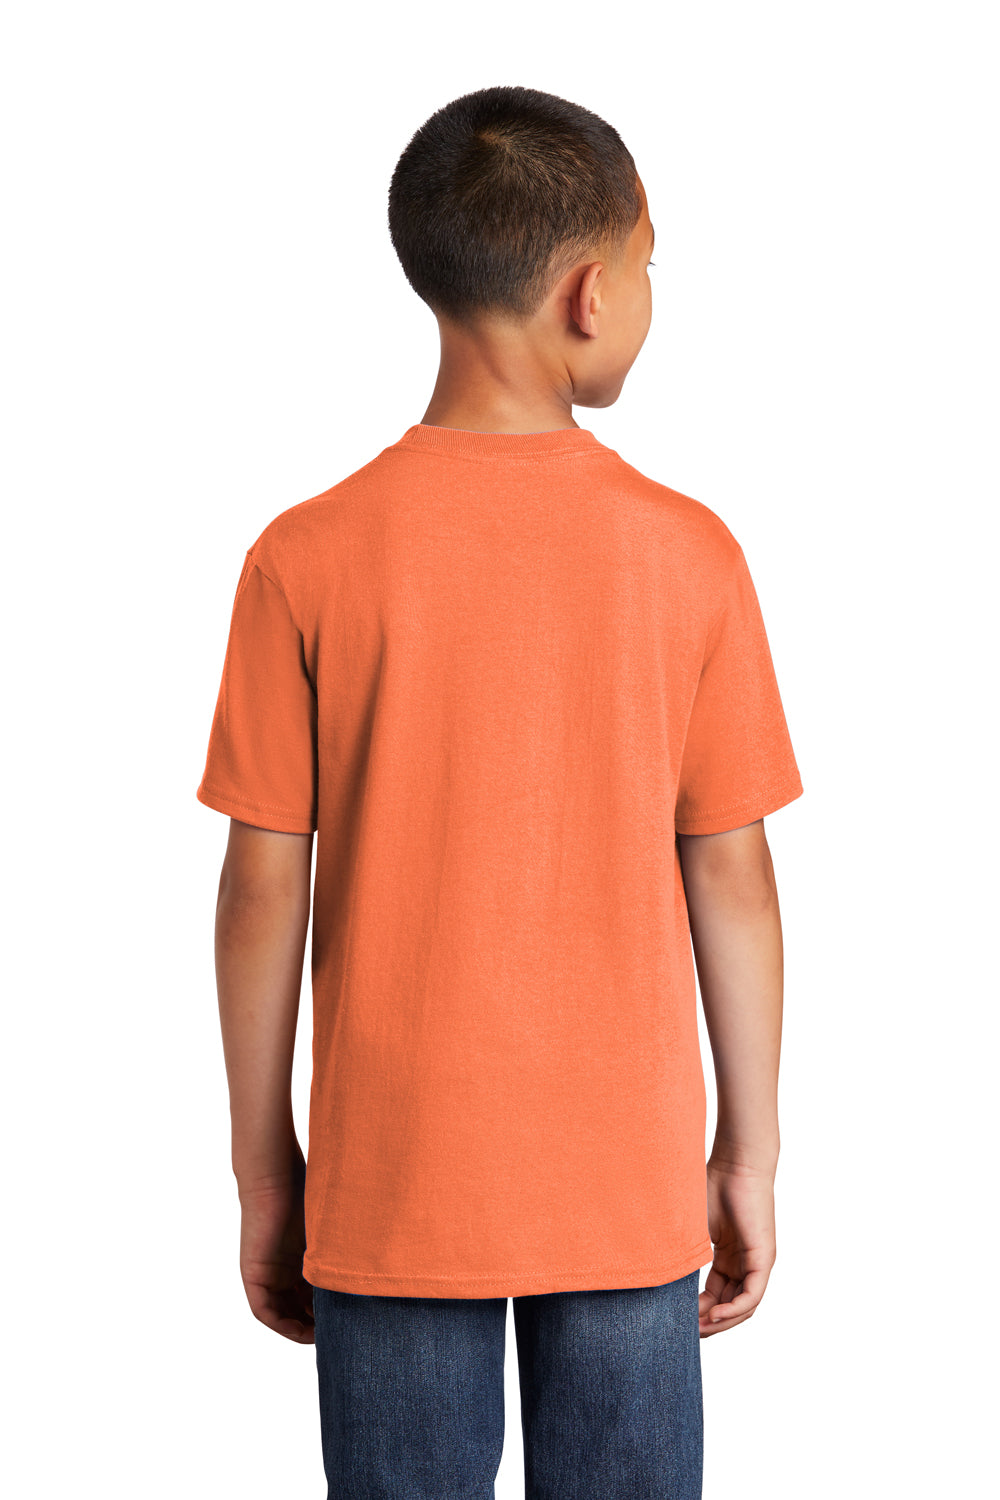 Port & Company PC54Y Youth Core Short Sleeve Crewneck T-Shirt Neon Orange Back